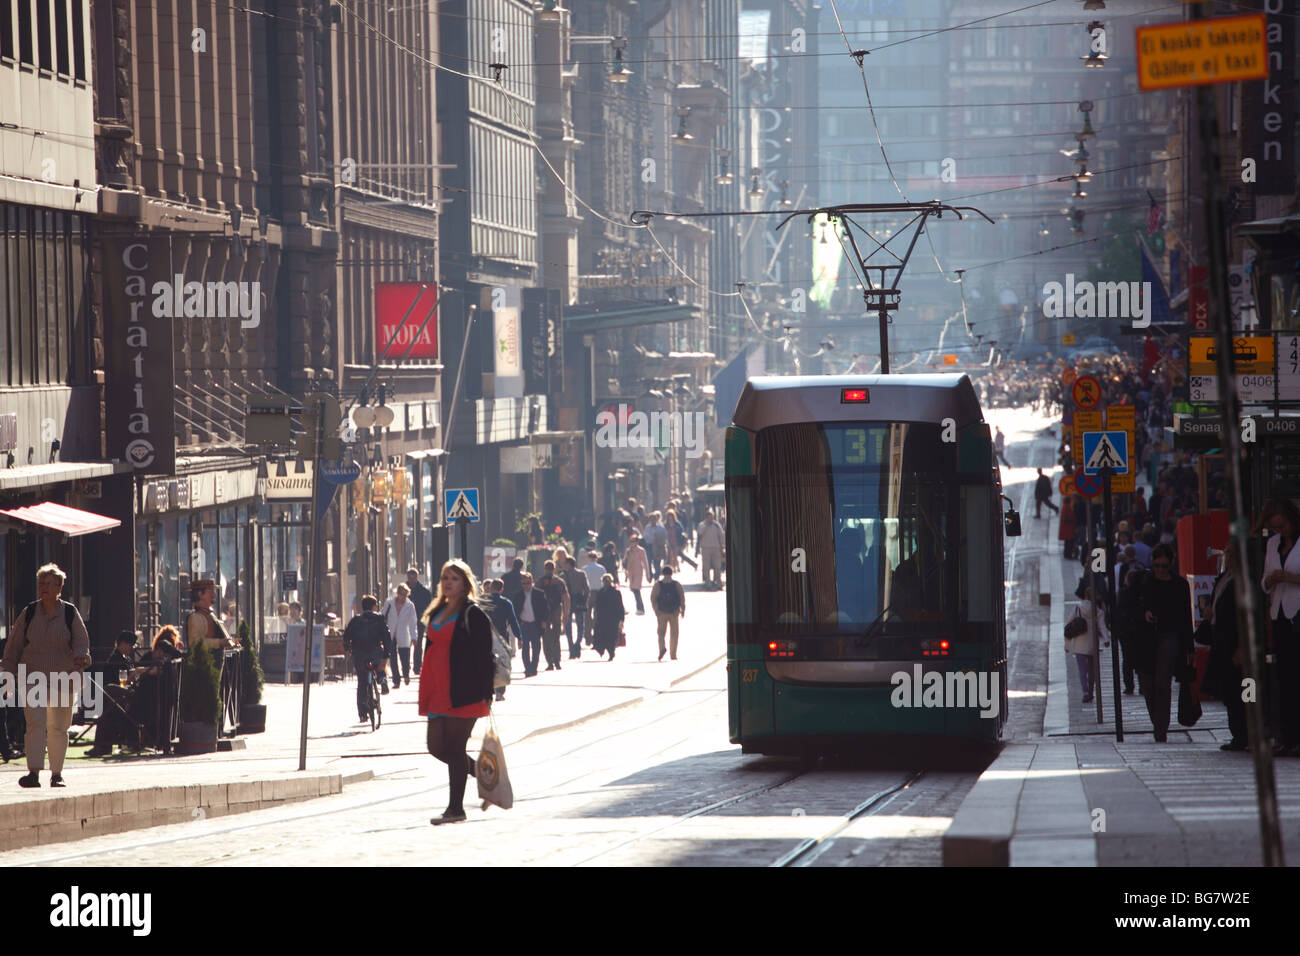 Finland, Helsinki, Helsingfors, Aleksanterinkatu, Aleksanterink Street, Tram, Pedestrians Stock Photo